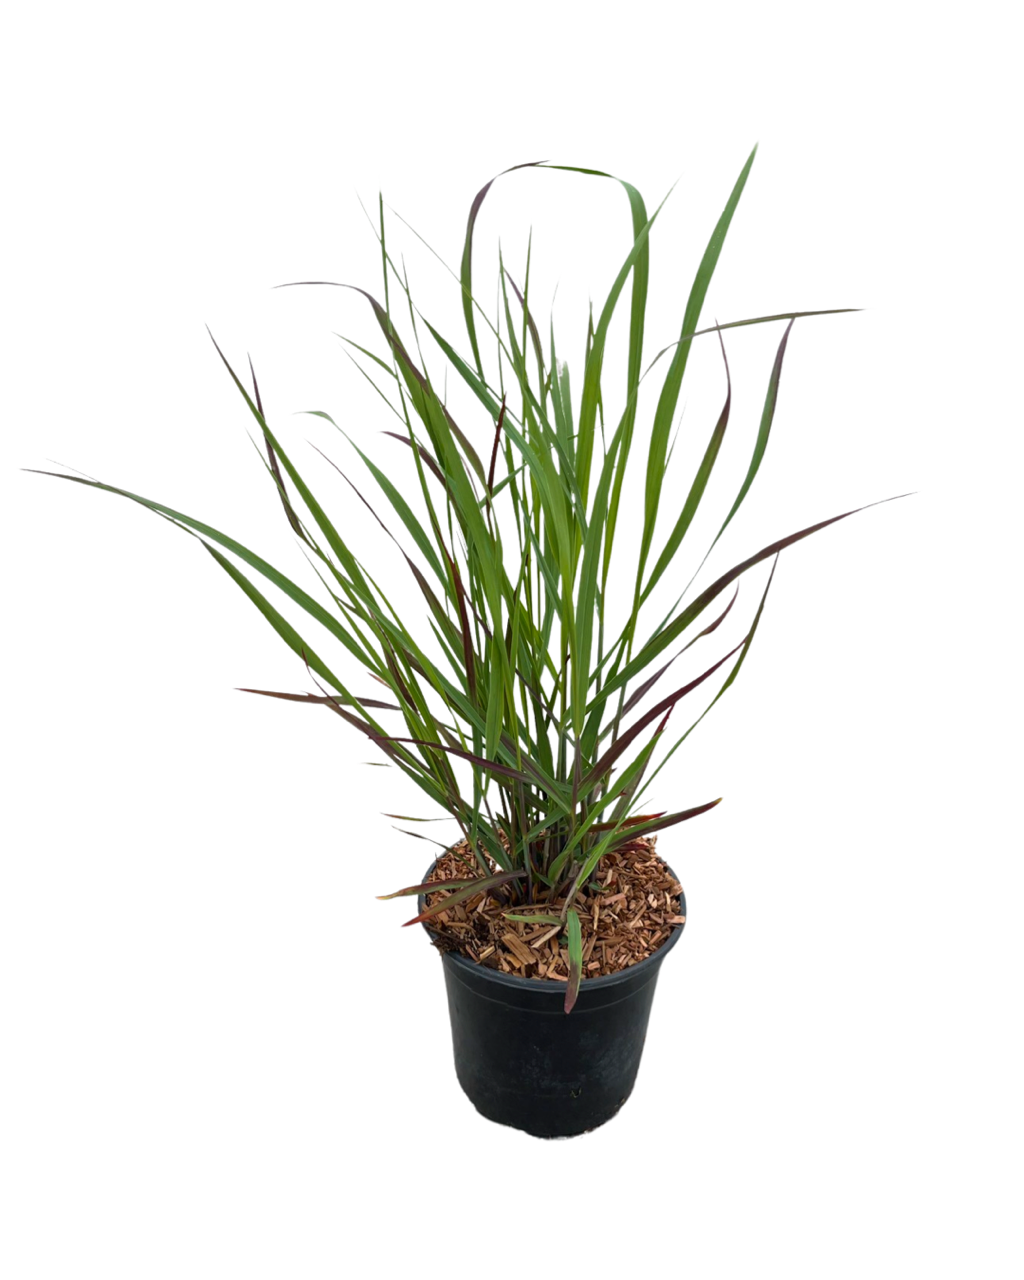 Grass - Panicum virgatum 'Prairie Flame' (1 Gallon)